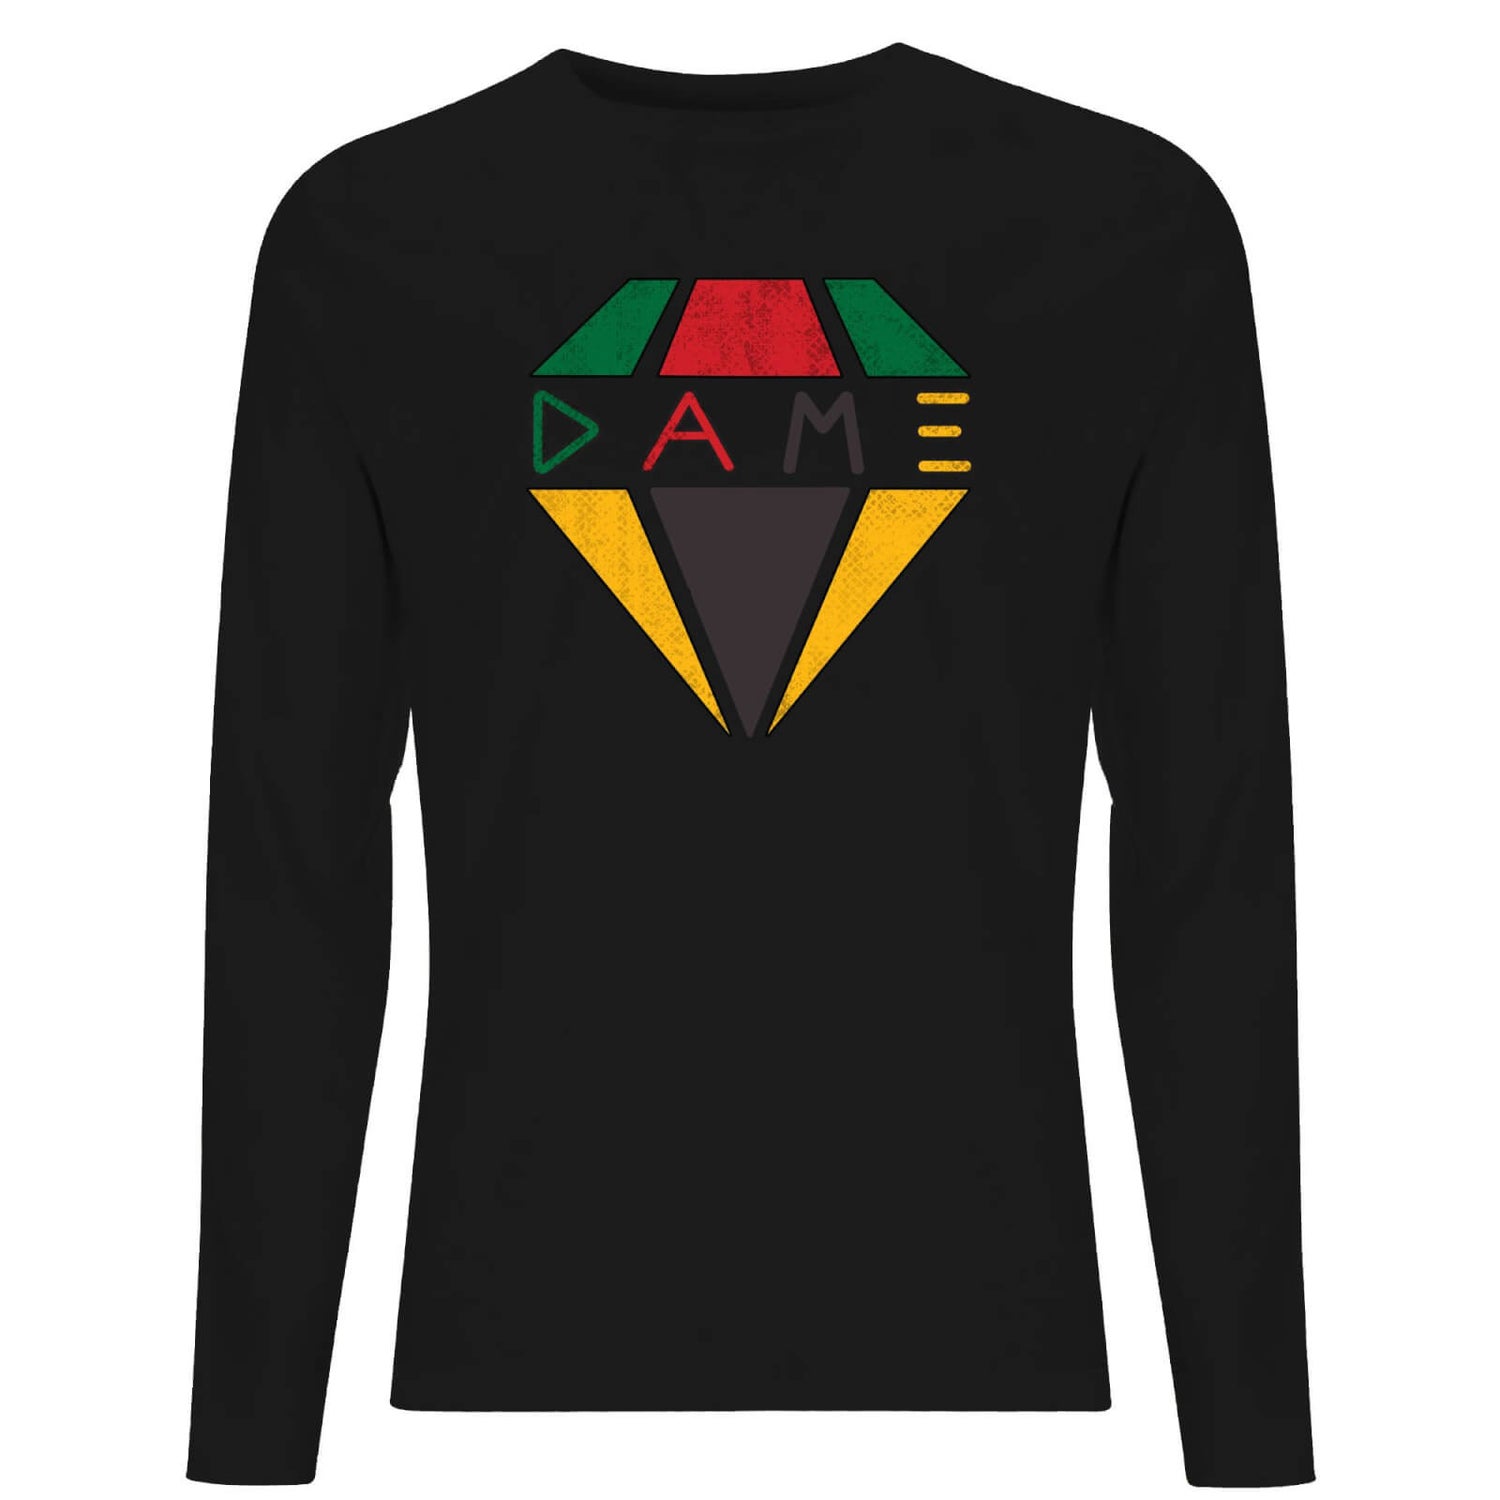 Creed DAME Diamond Logo Men's Long Sleeve T-Shirt - Black